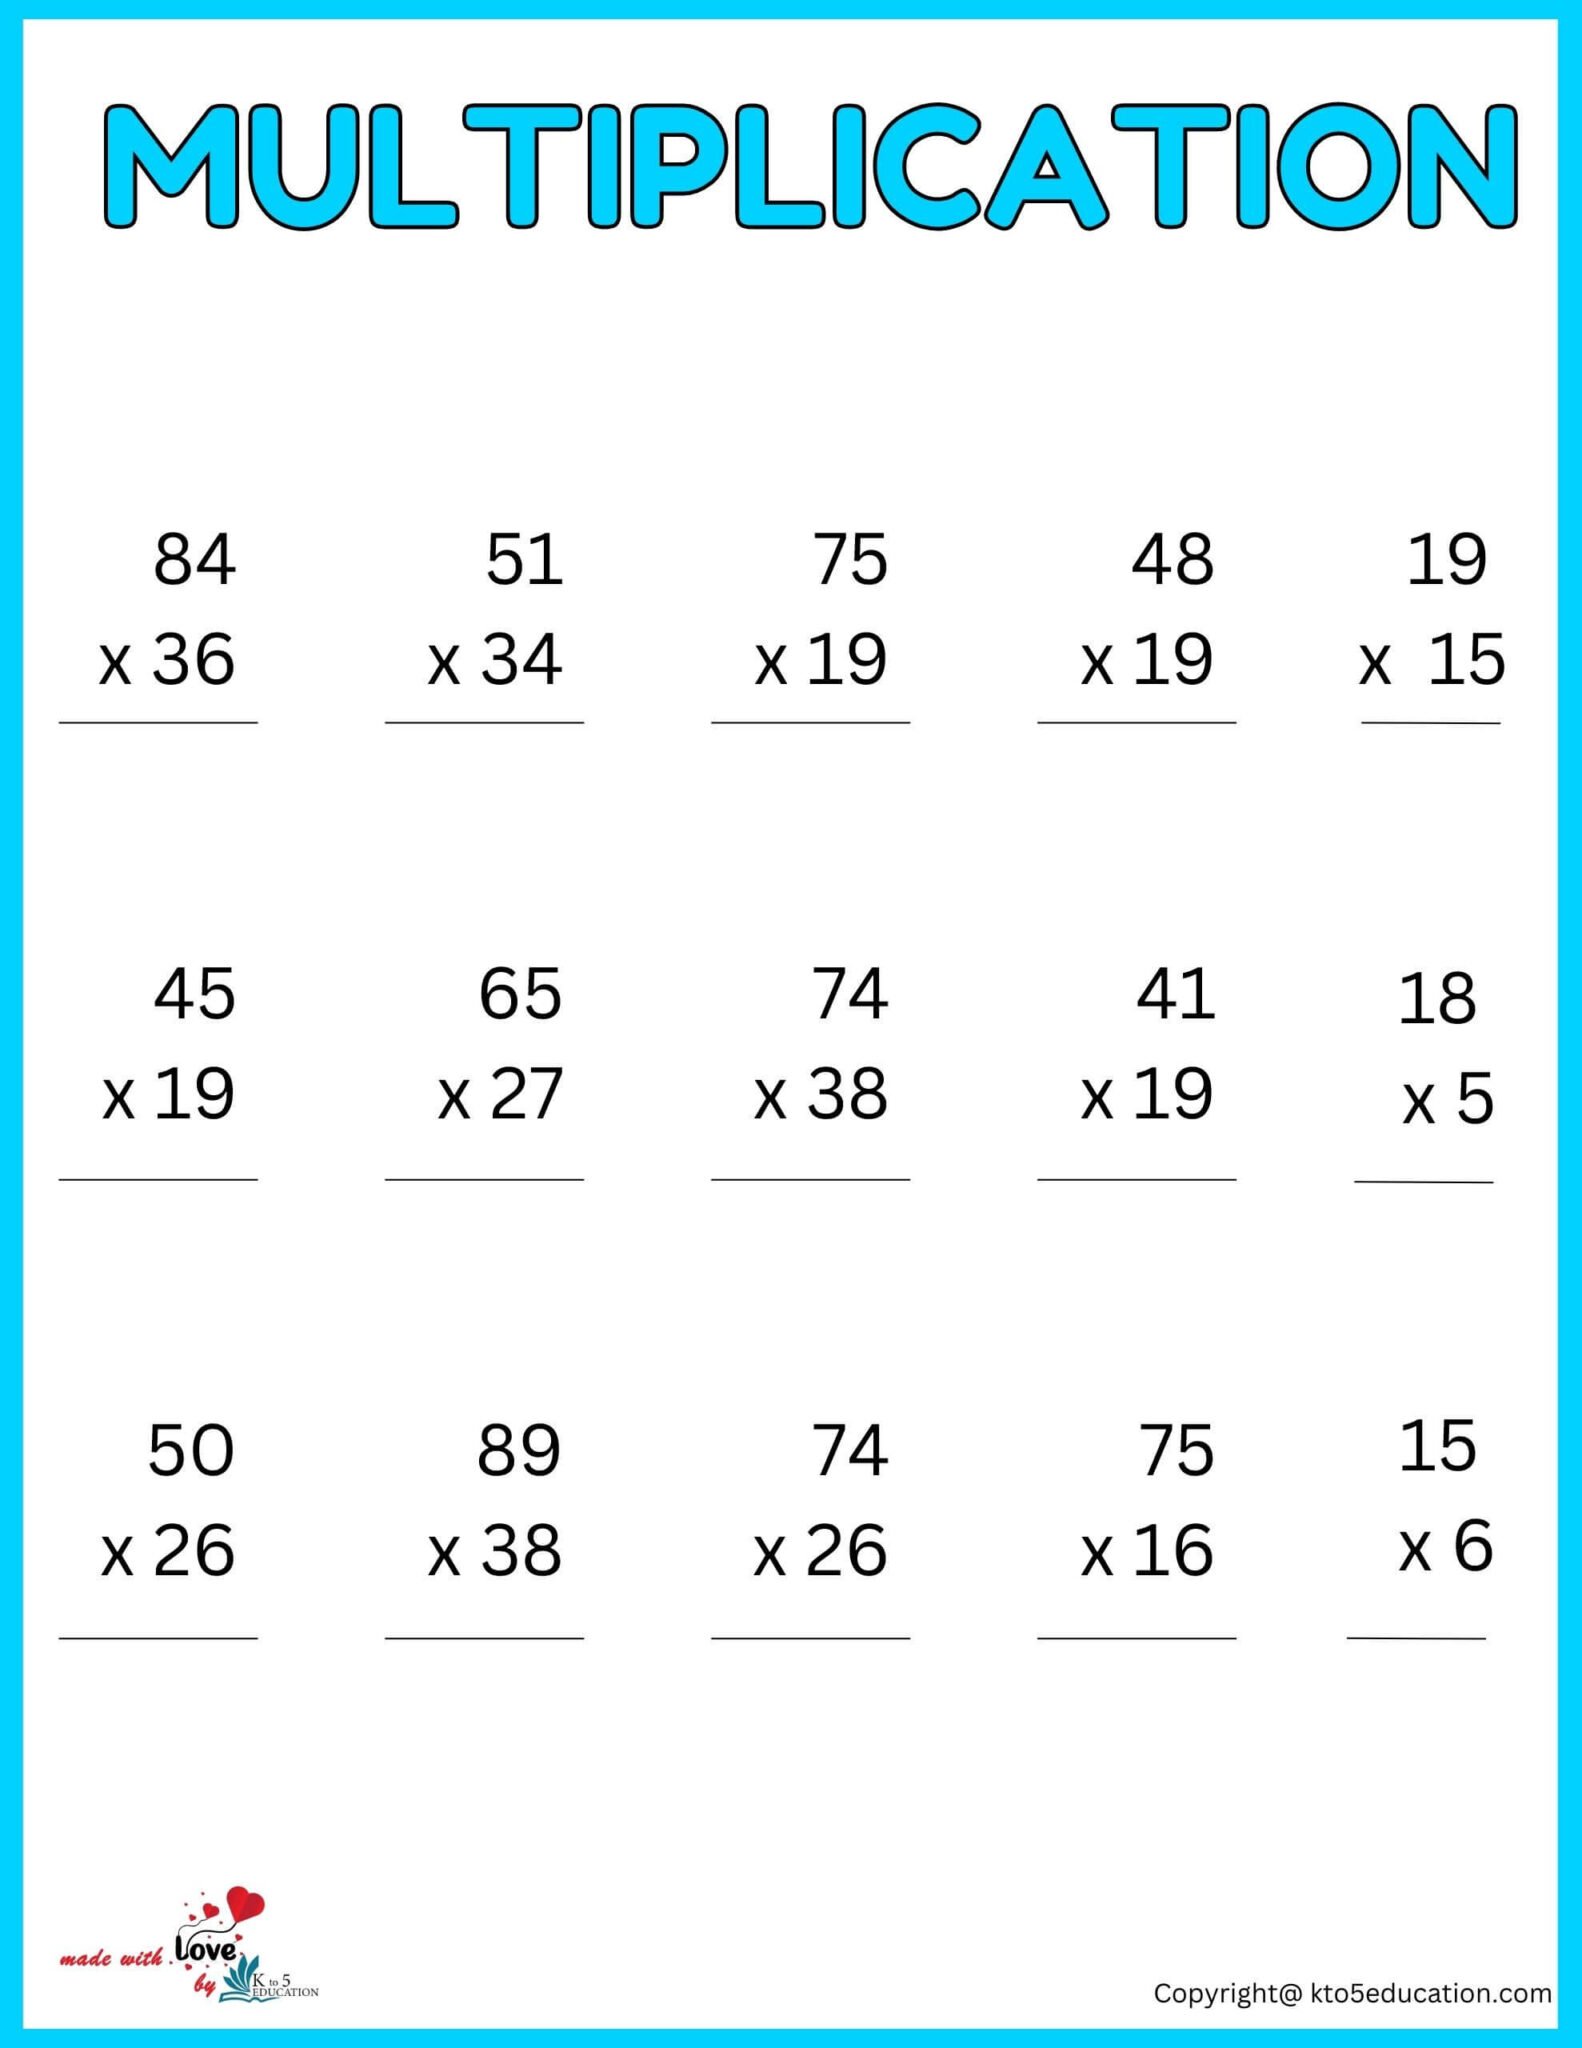 subtraction-with-number-line-worksheet-1-10-2nd-grade